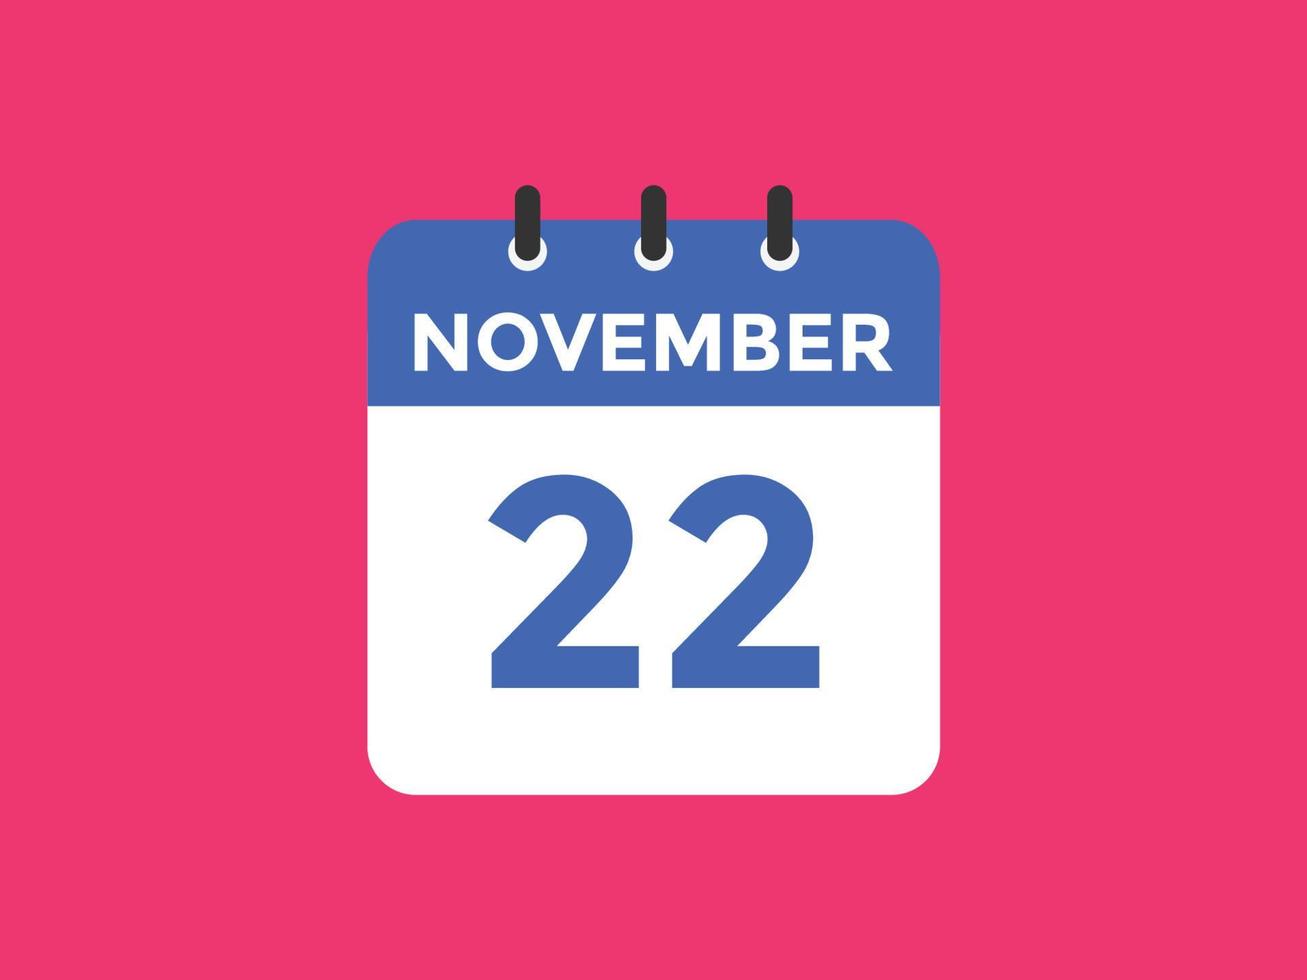 november 22 calendar reminder. 22th november daily calendar icon template. Calendar 22th november icon Design template. Vector illustration